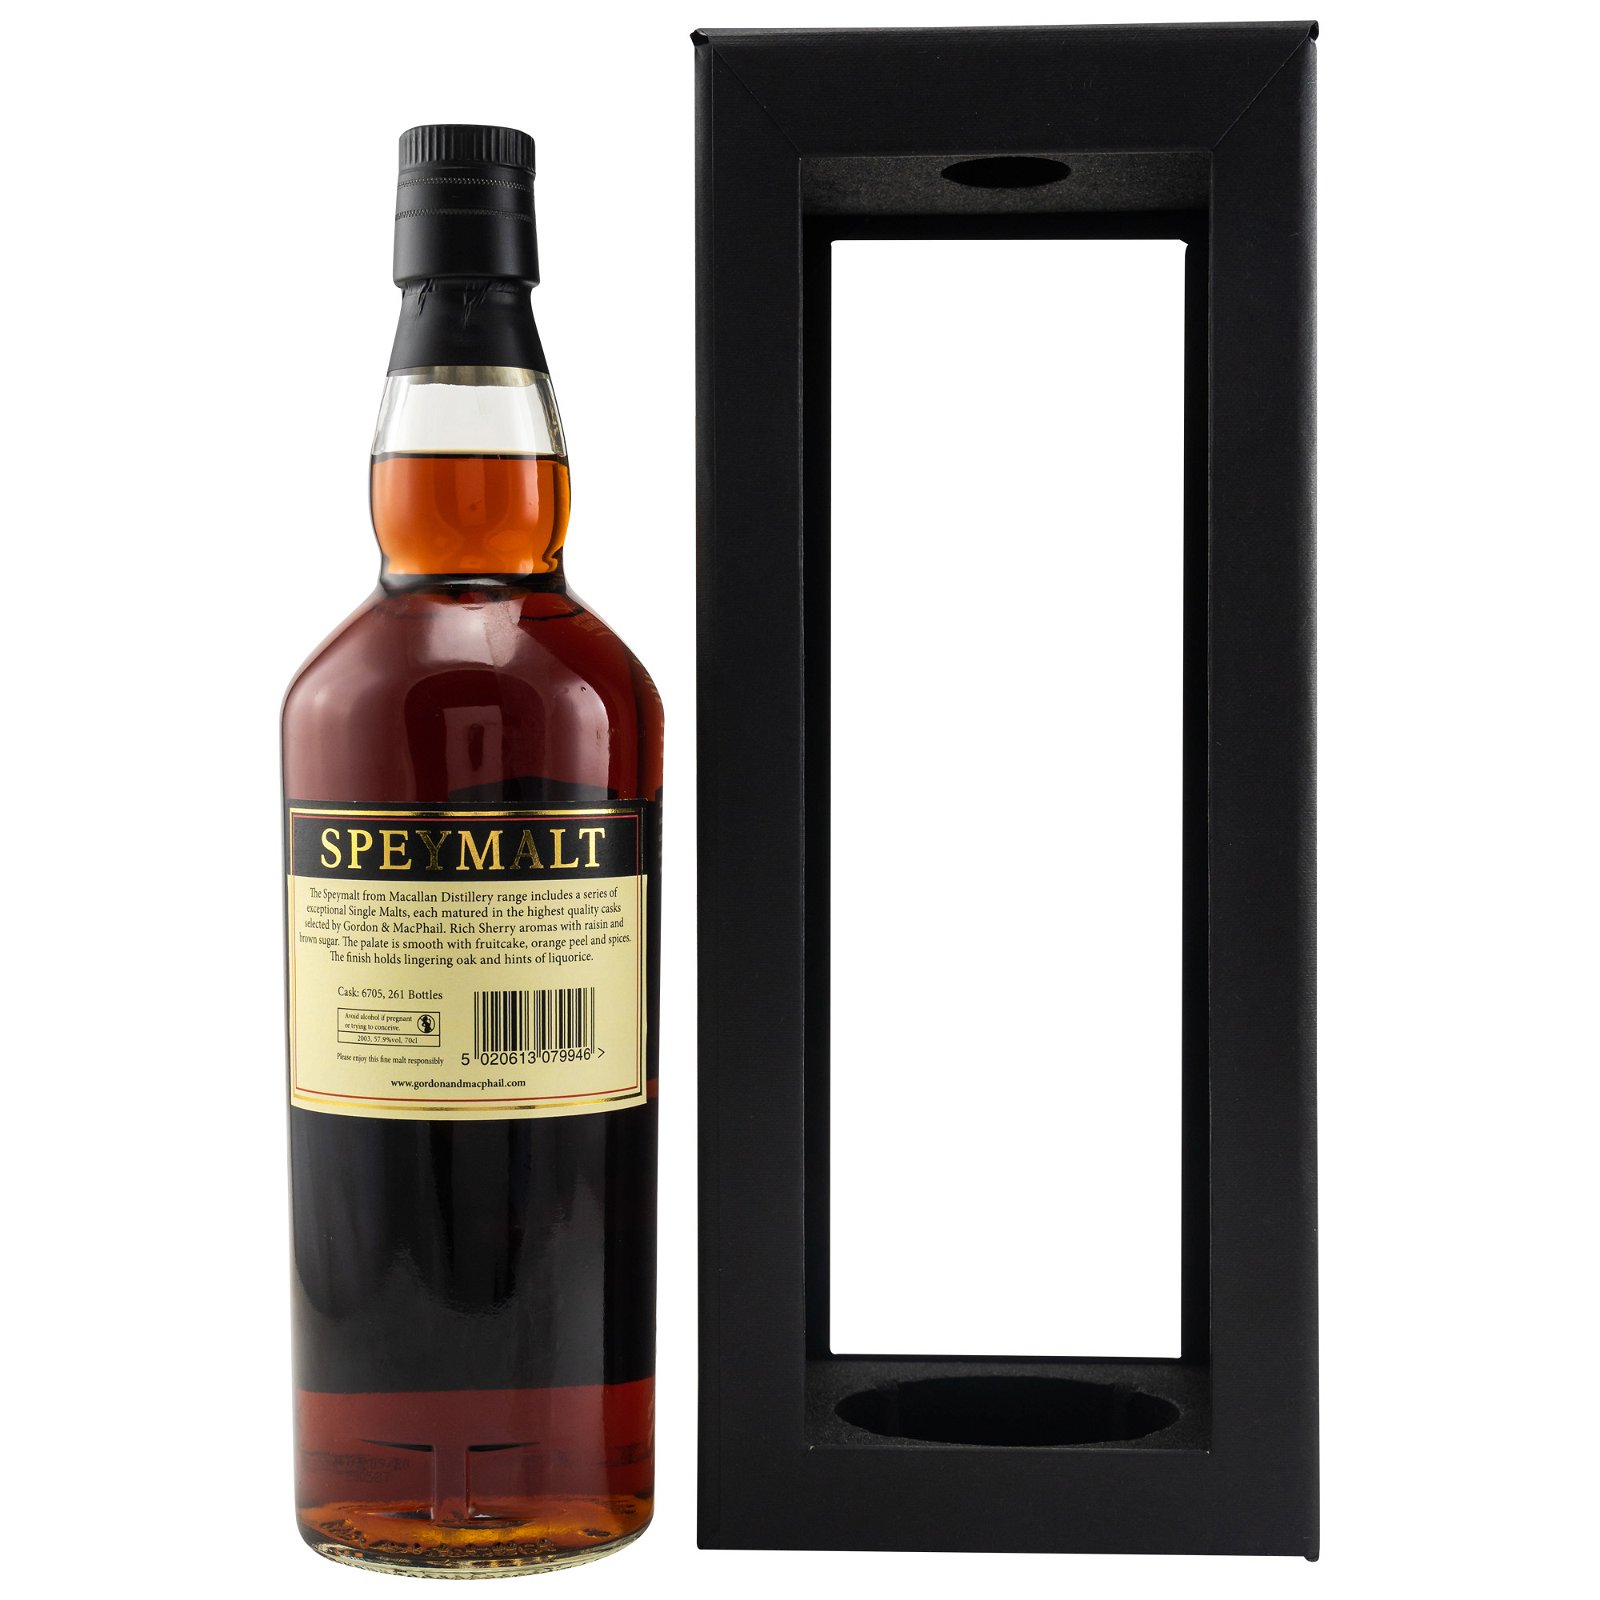 Gordon & Macphail 17 Jahre Speymalt Macallan Distillery 03/20 Cask Strength Scotch Whisky 